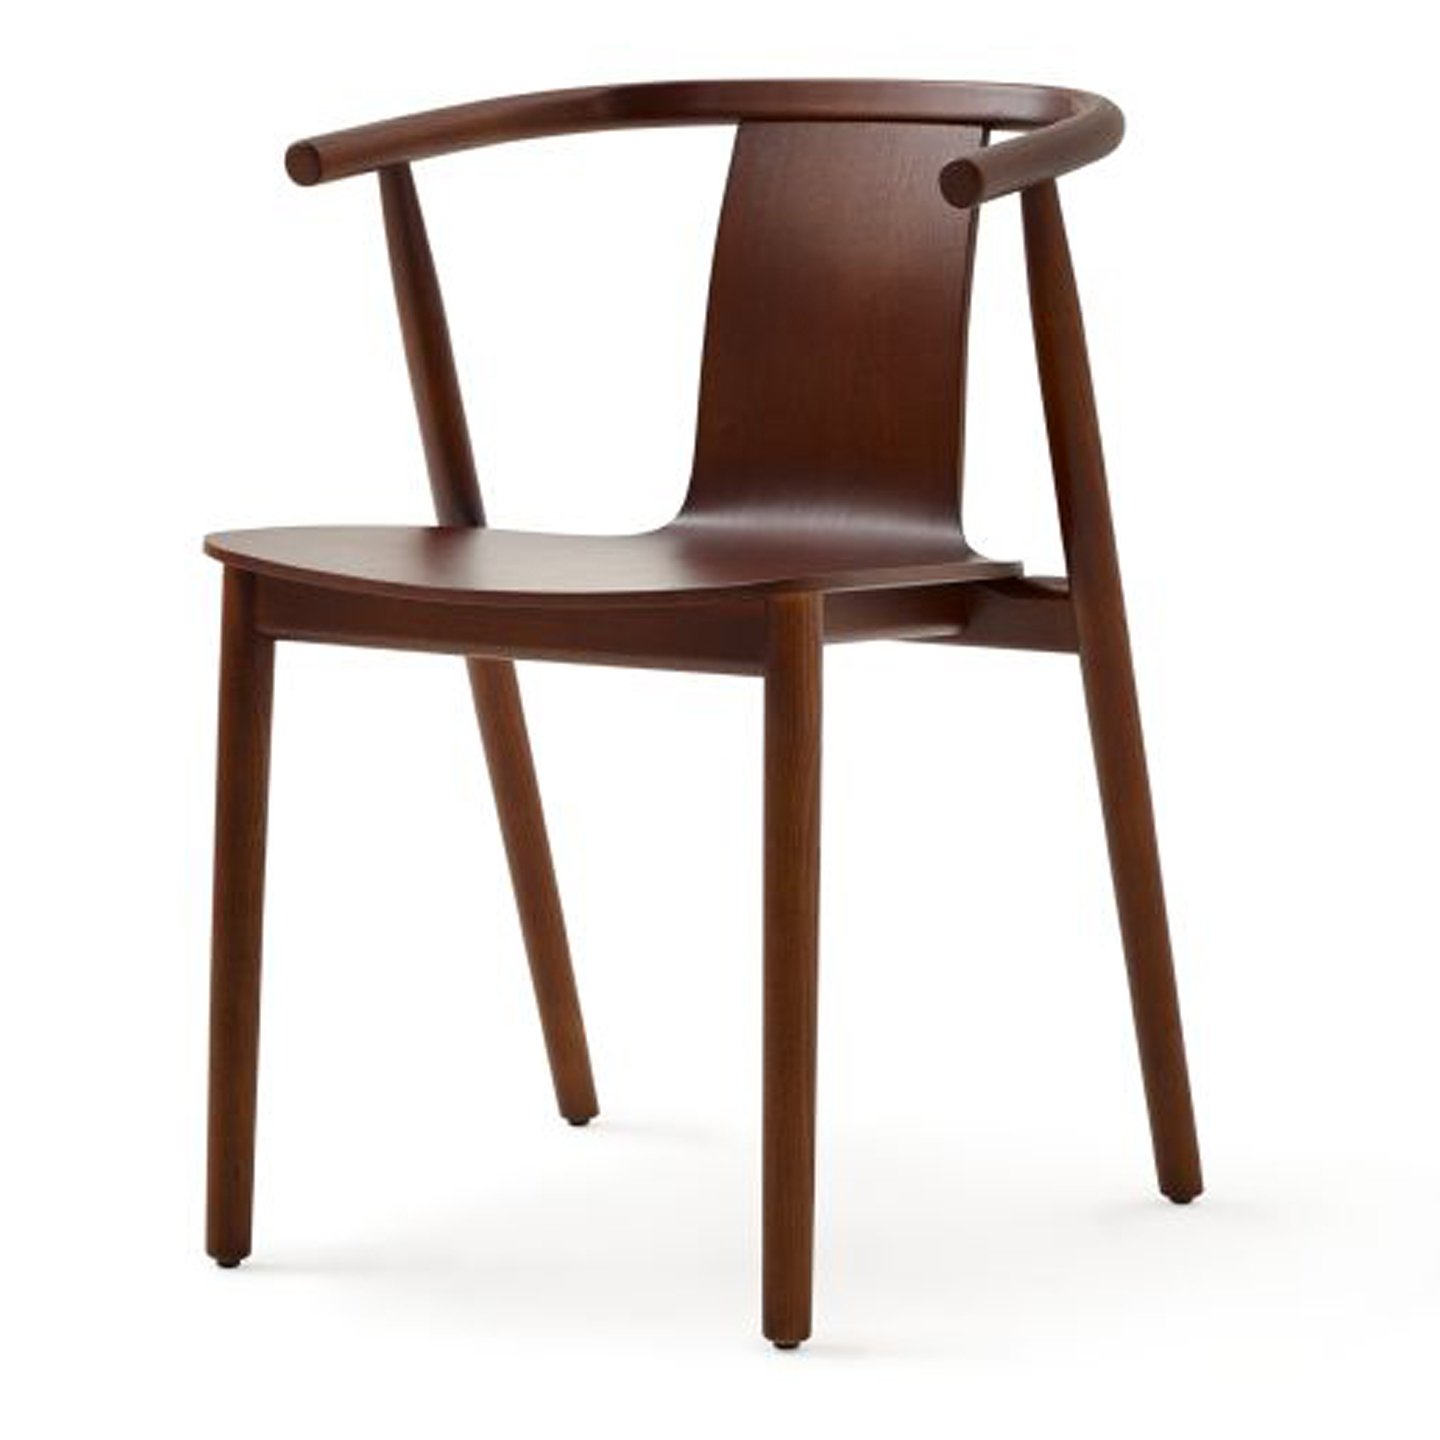 Haworth Bac chair in dark brown wood in a side angle